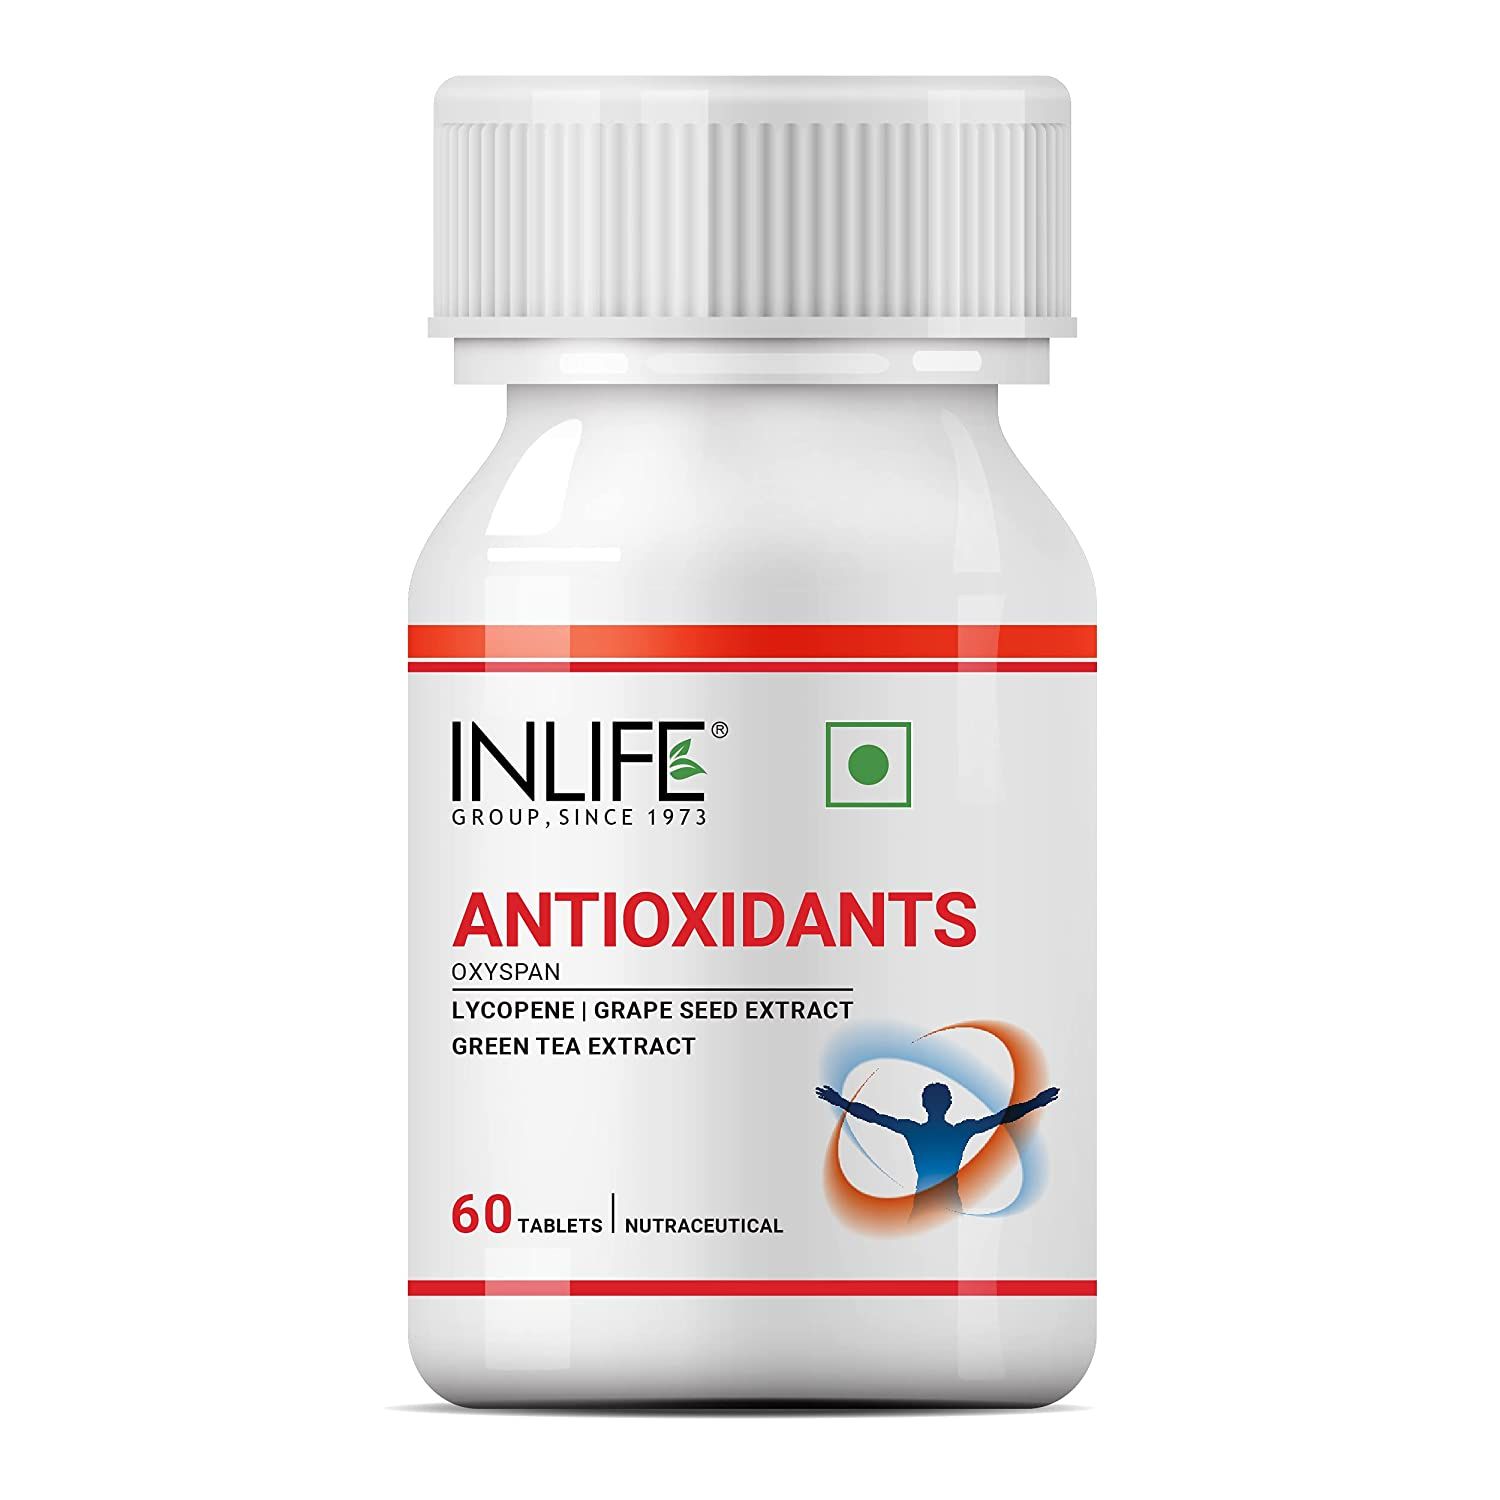 INLIFE Antioxidants Supplements Image